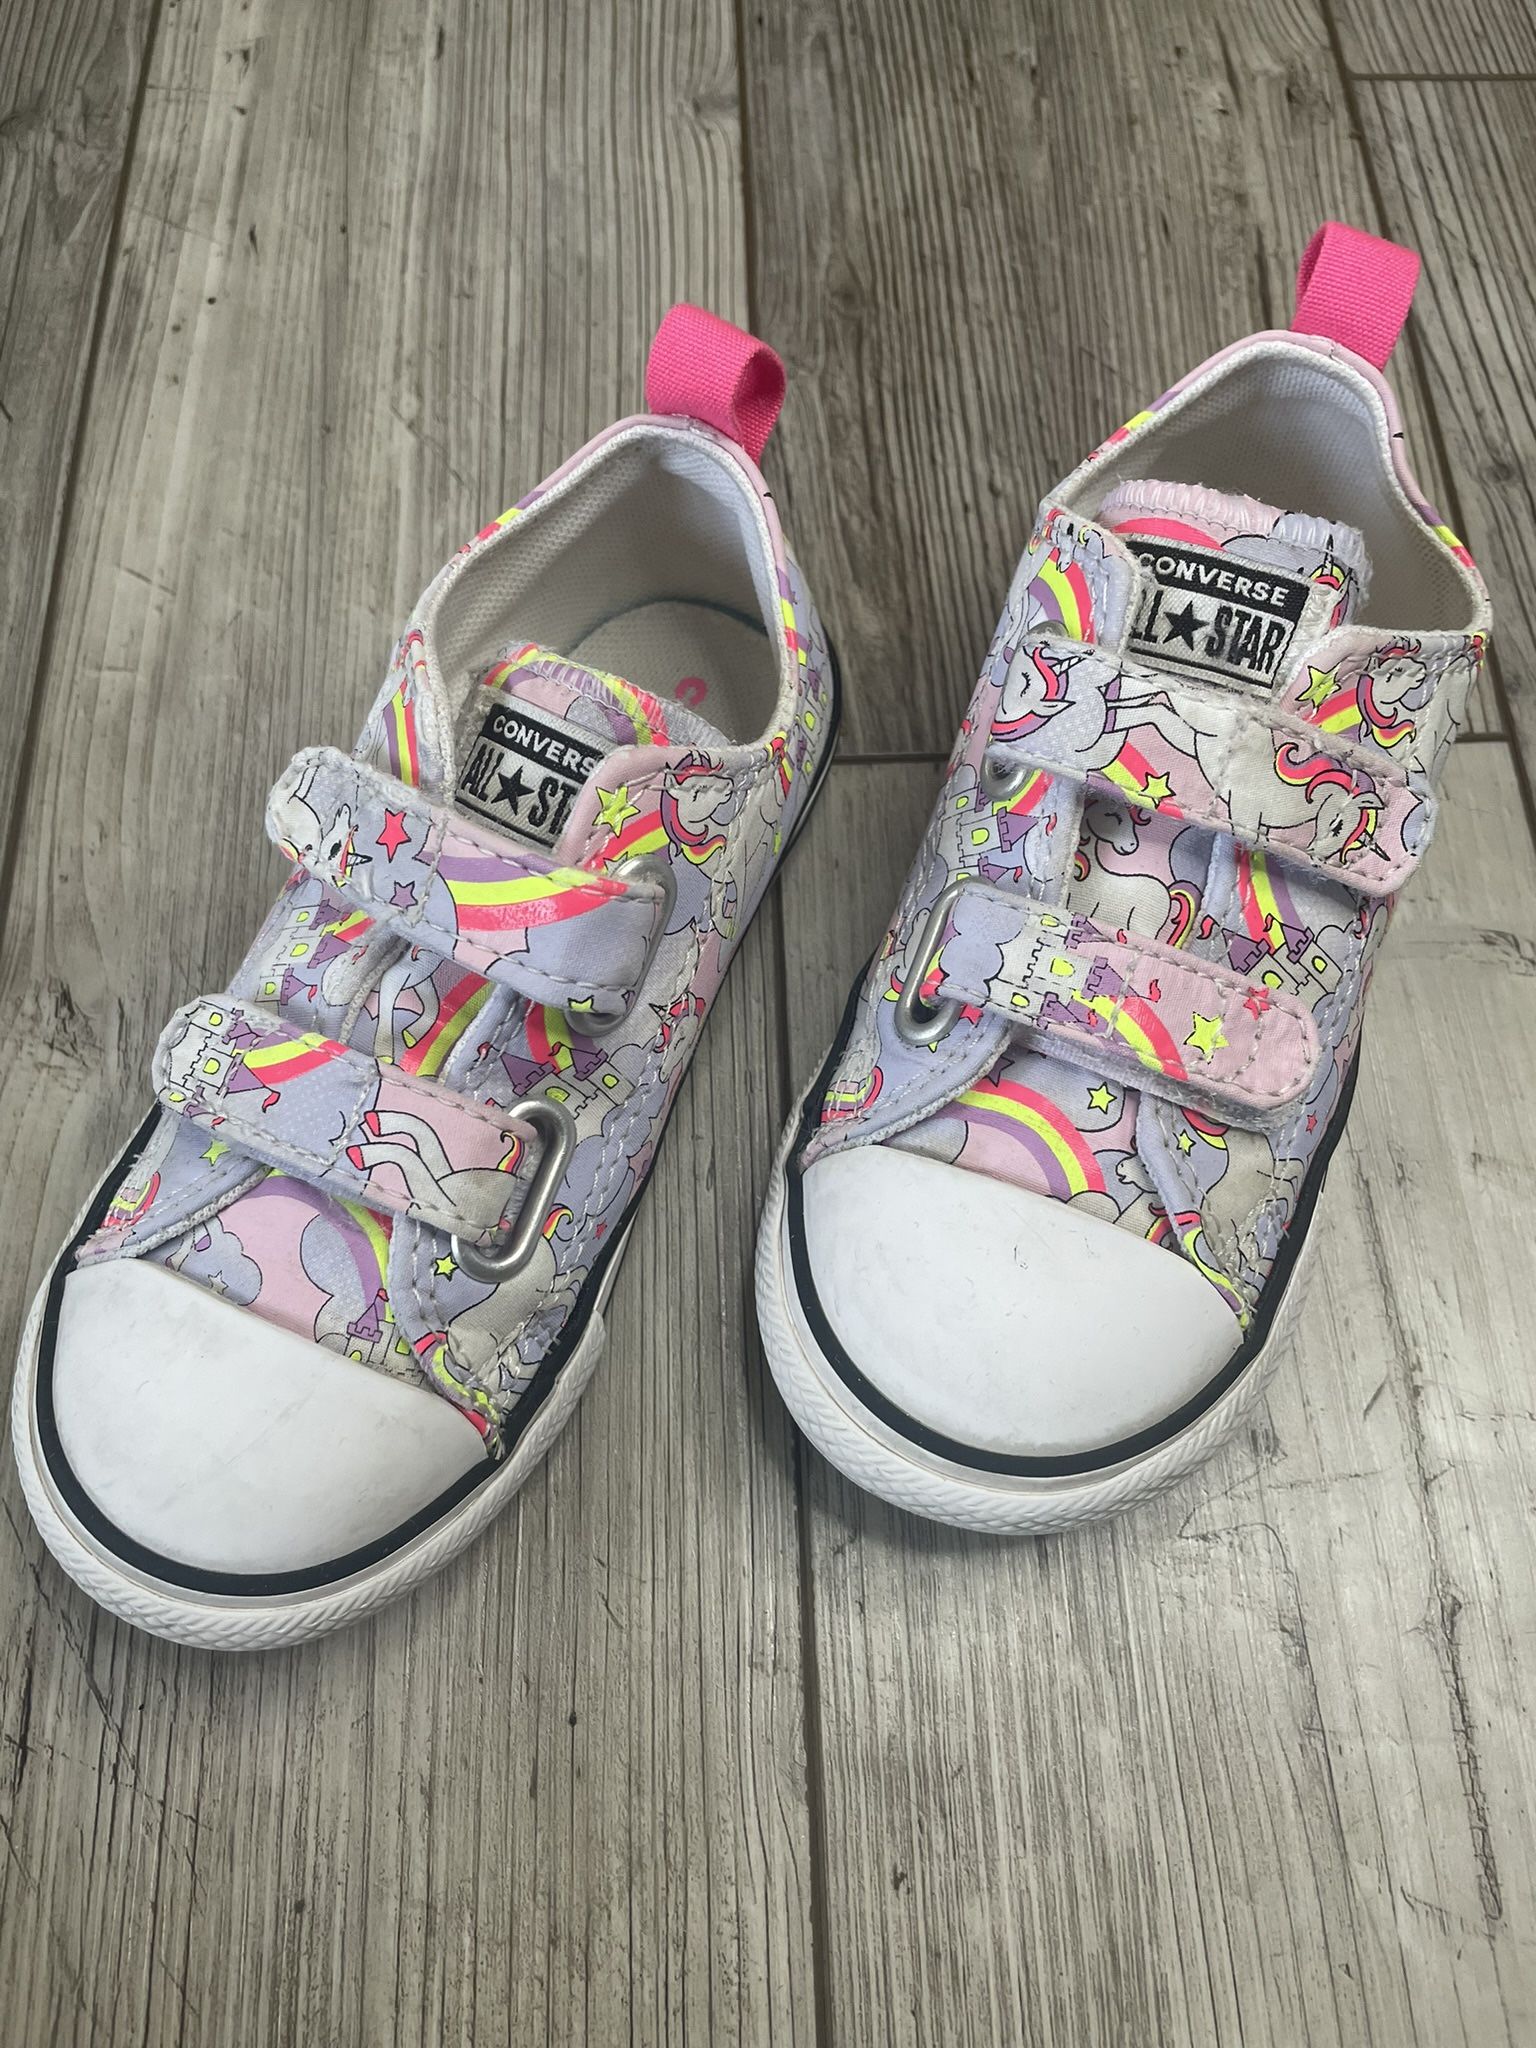 Converse Girls Kids Shoes Size 9